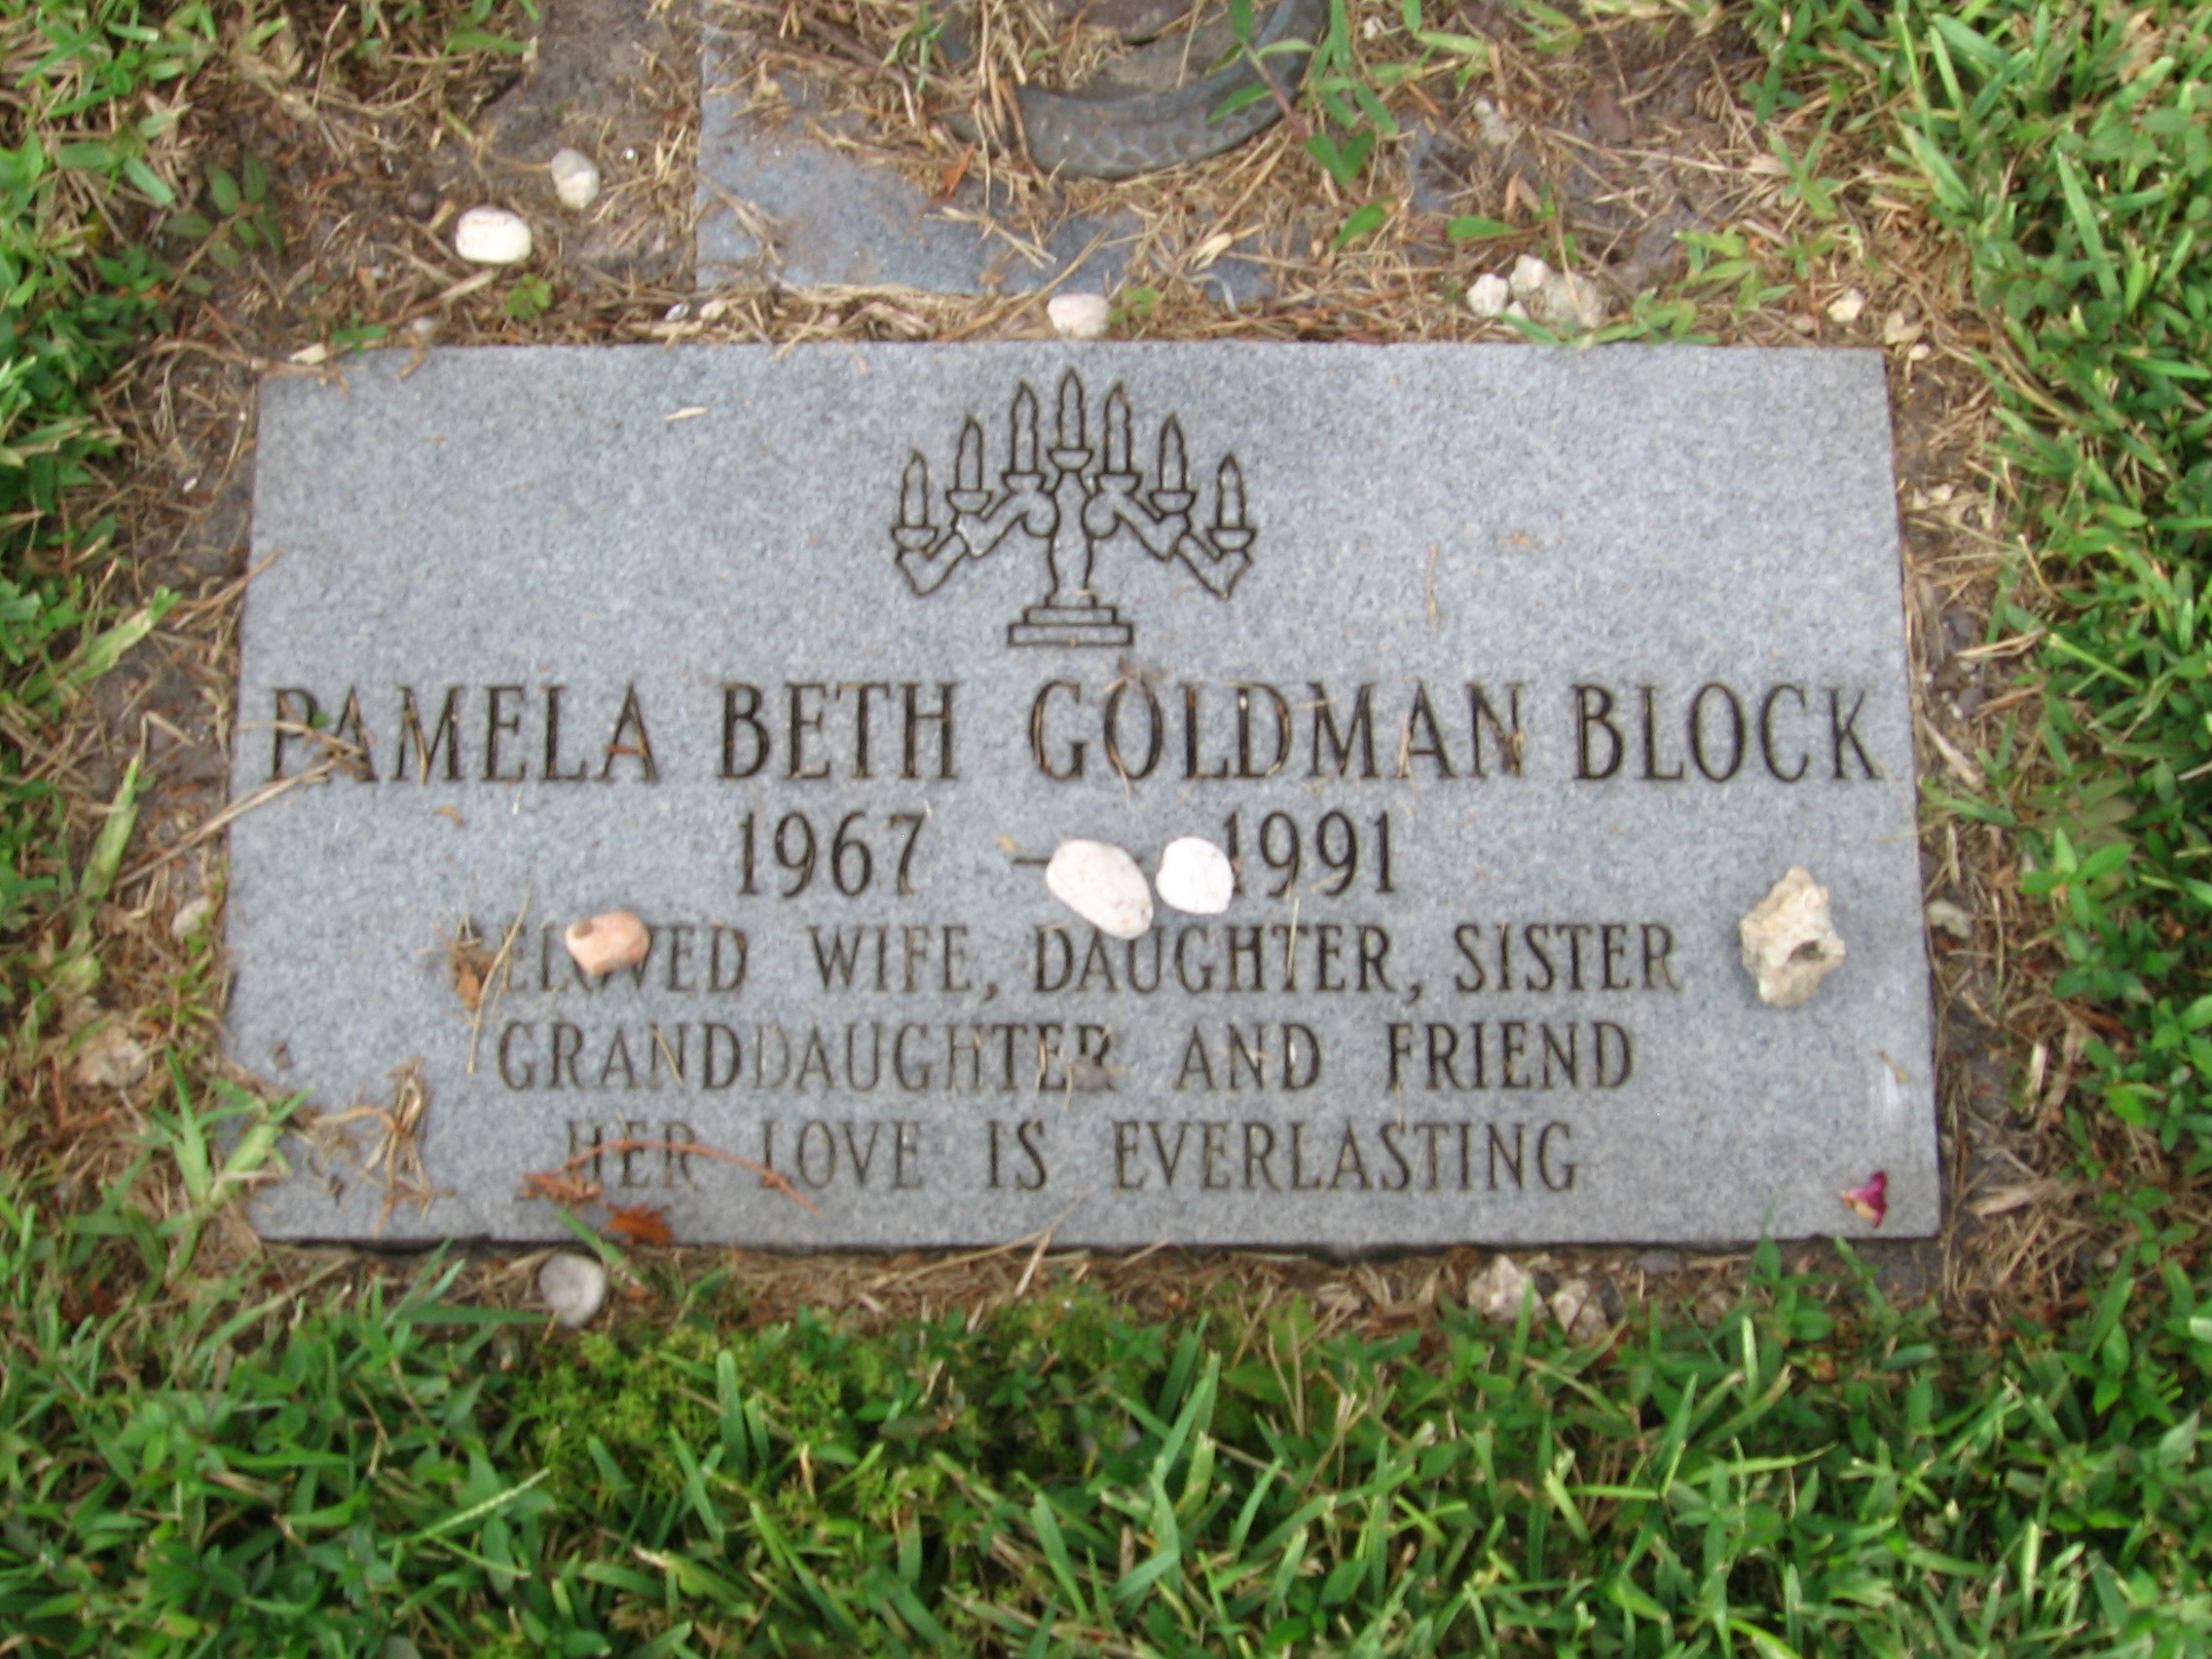 Pamela Beth Goldman Block